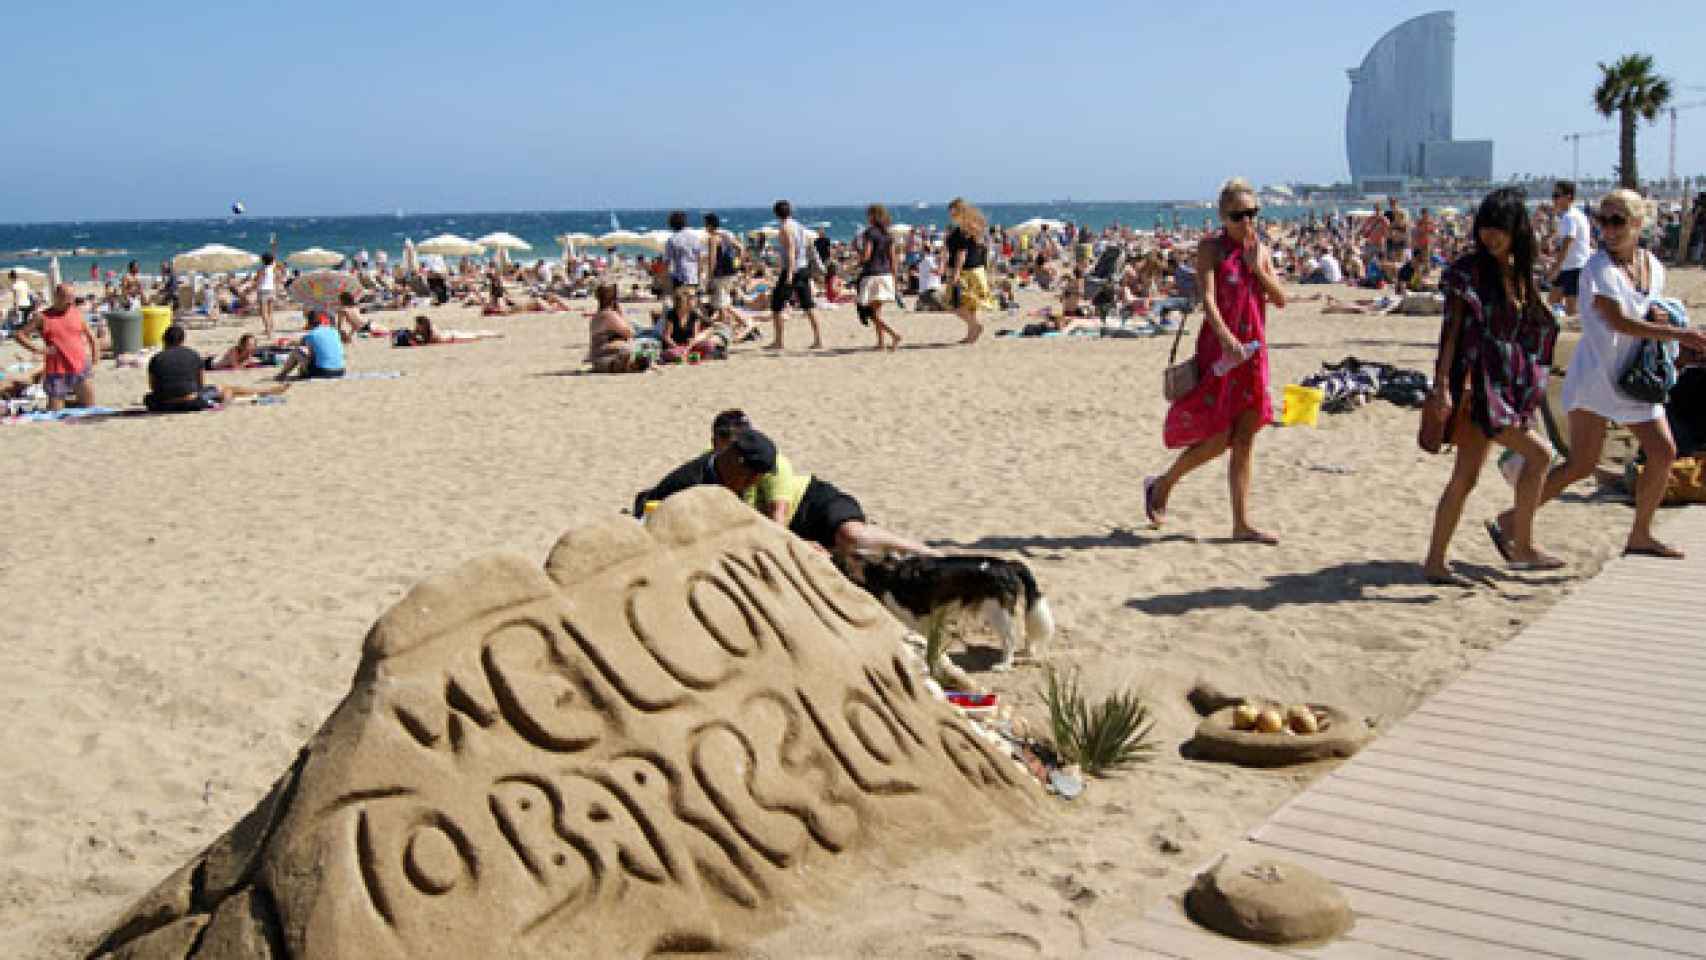 Imagen de la playa de la Barceloneta, en Barcelona / CG